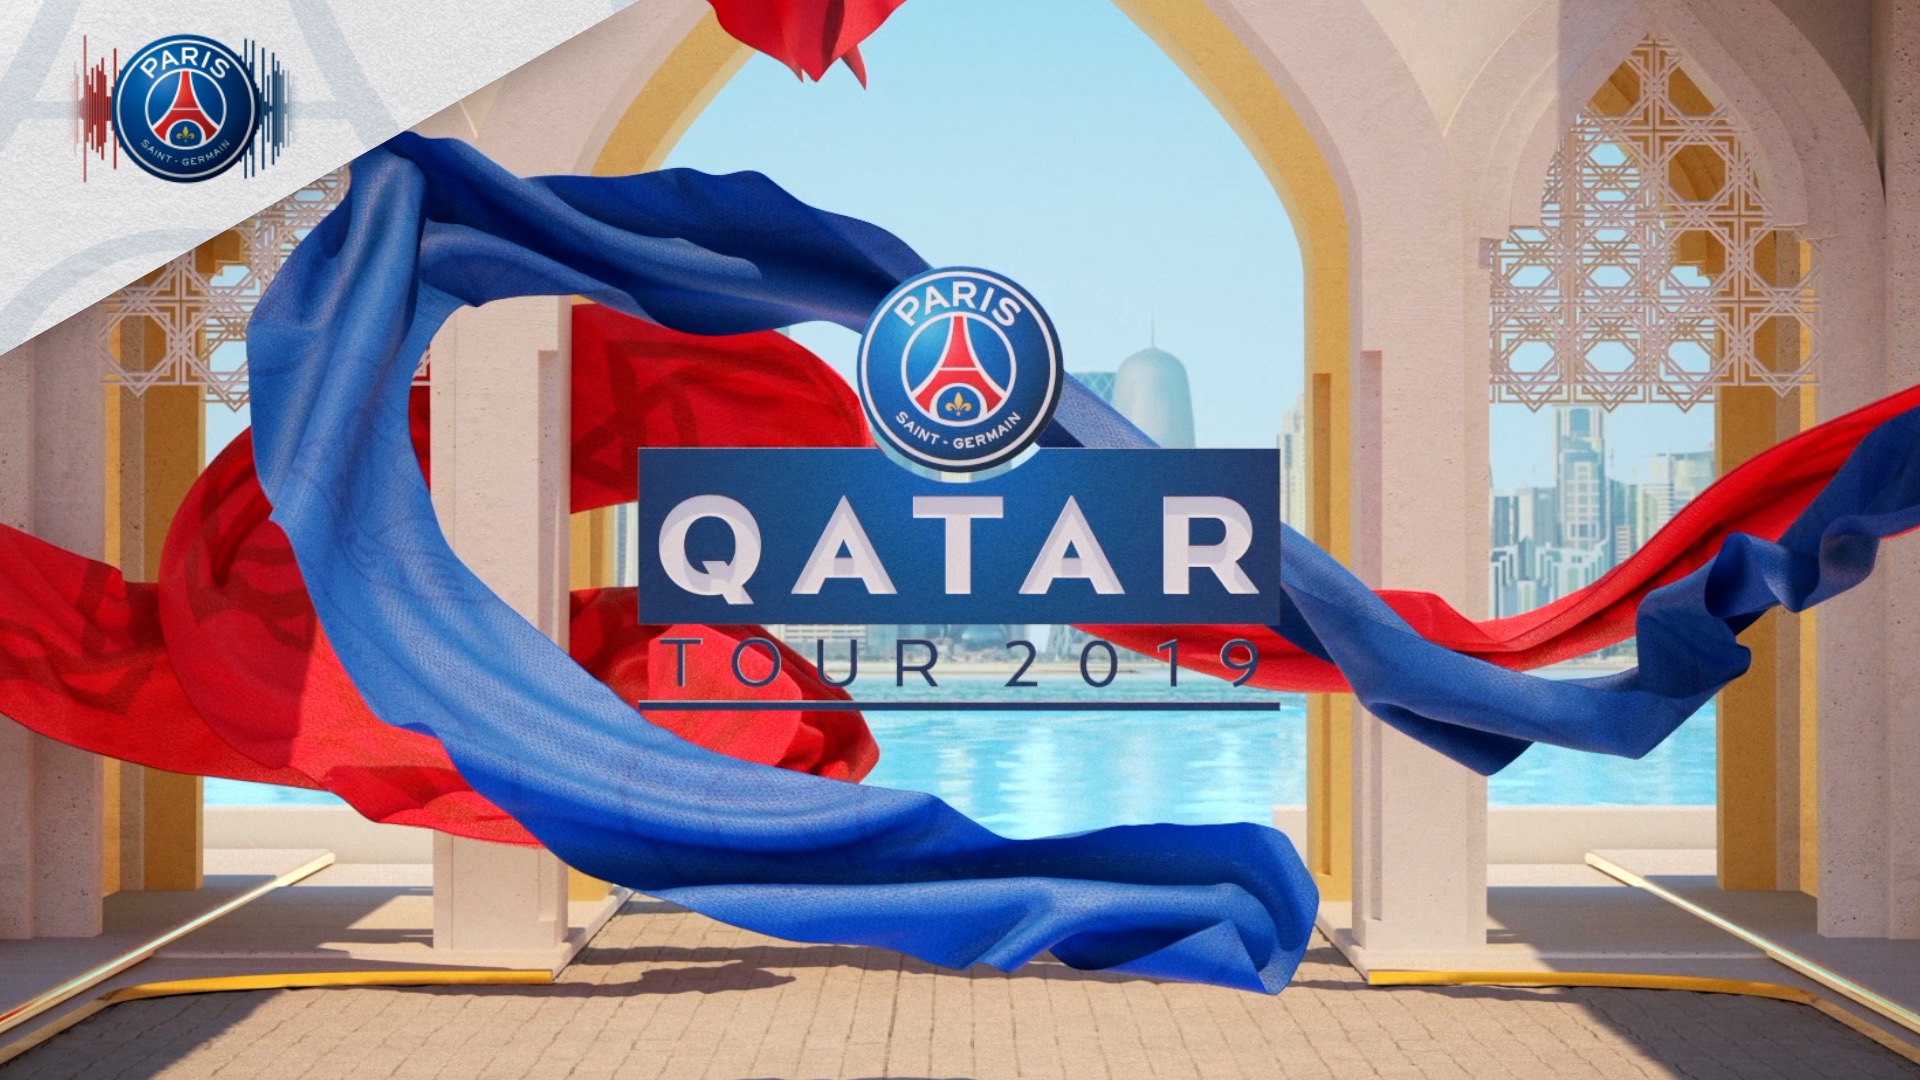 qatar tourism psg